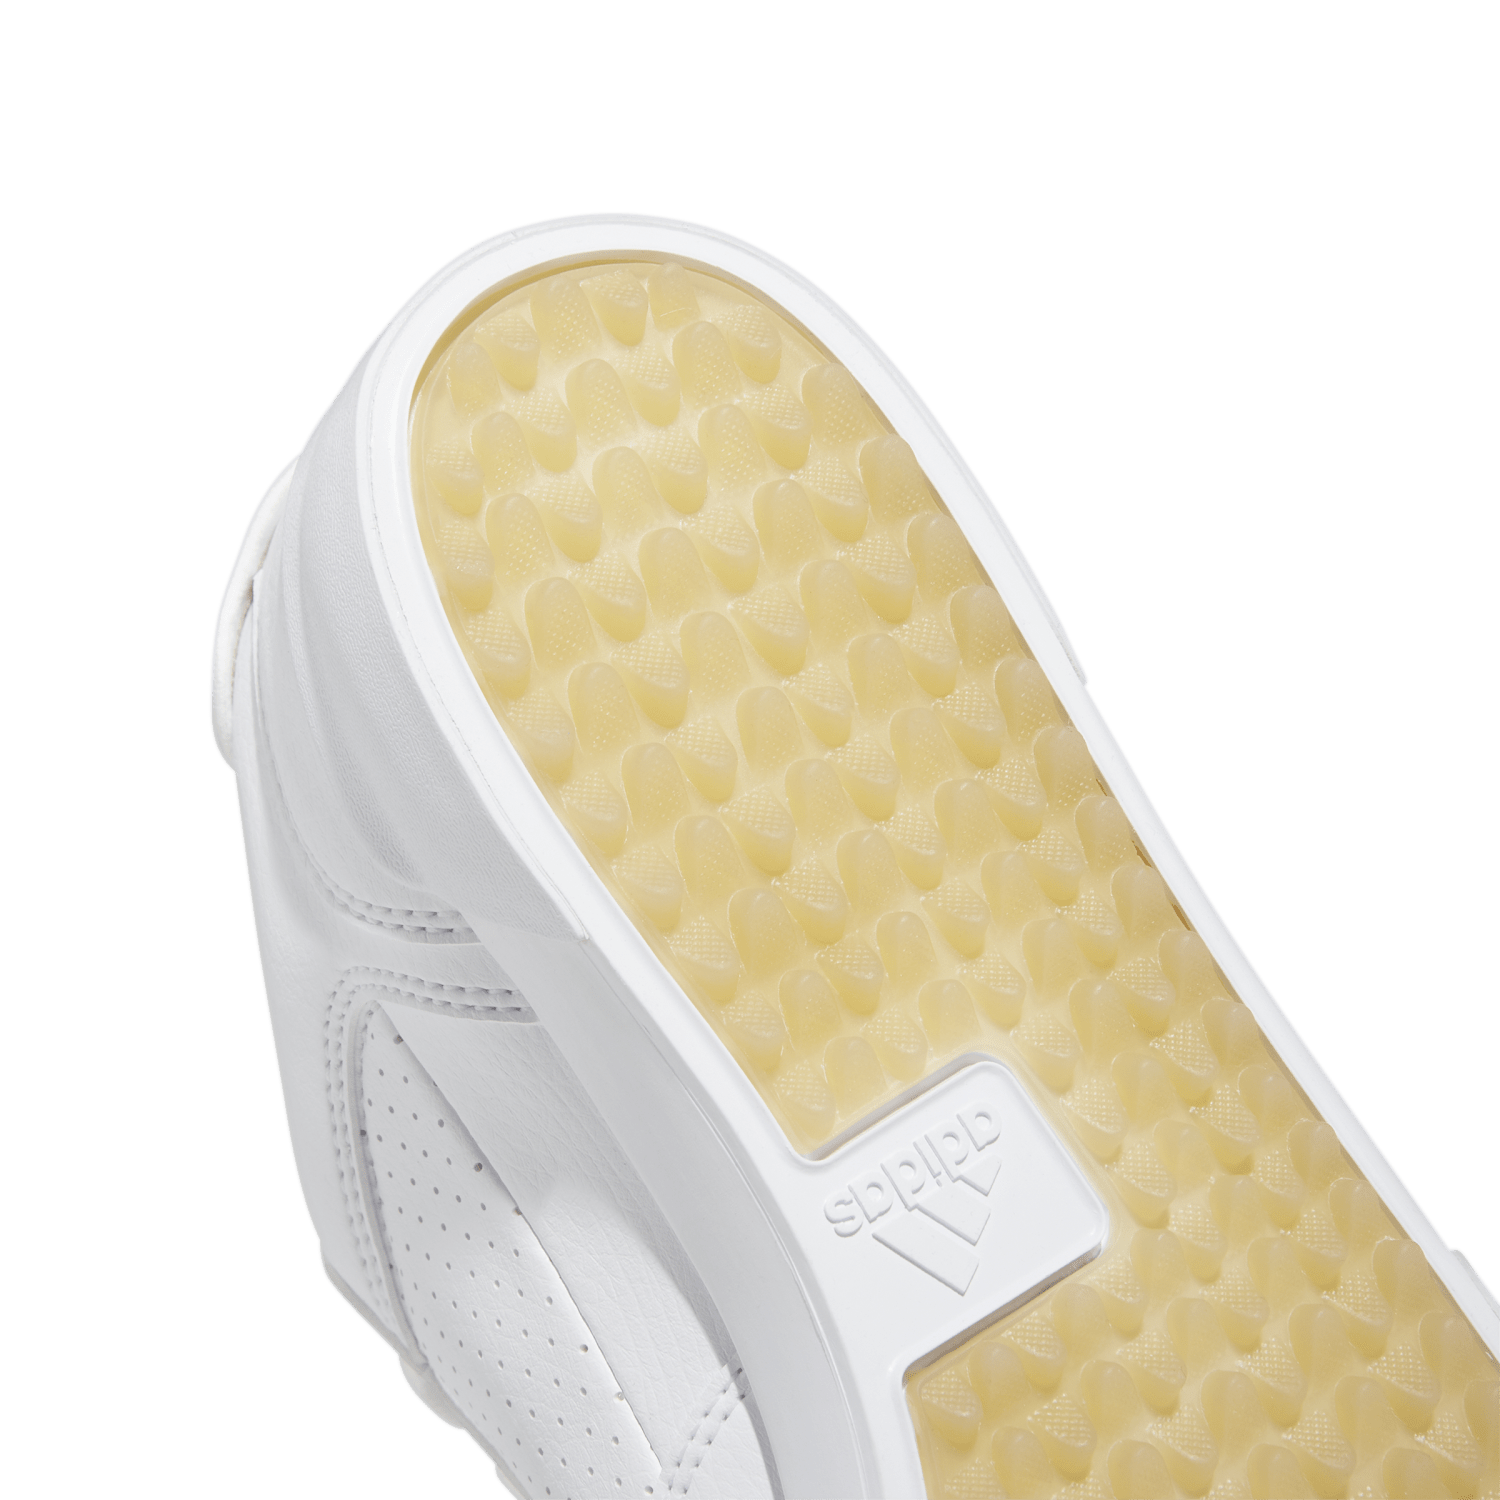 adidas RetroCross Womens Golf Shoes